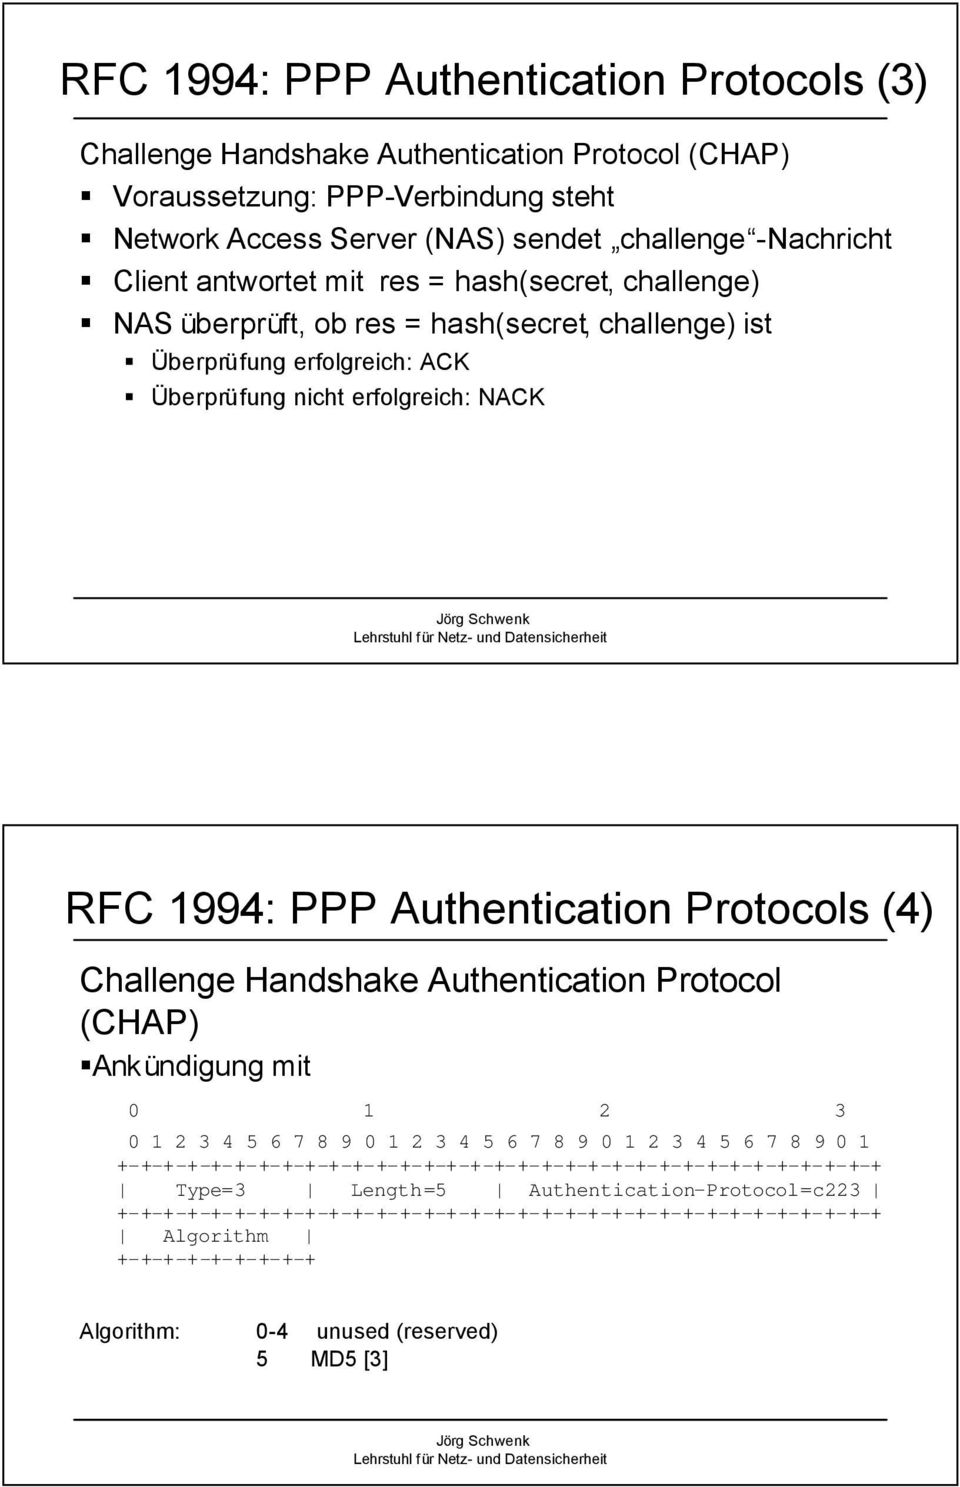 Protocols (4) Challenge Handshake Authentication Protocol (CHAP) Ankündigung mit 0 1 2 3 0 1 2 3 4 5 6 7 8 9 0 1 2 3 4 5 6 7 8 9 0 1 2 3 4 5 6 7 8 9 0 1